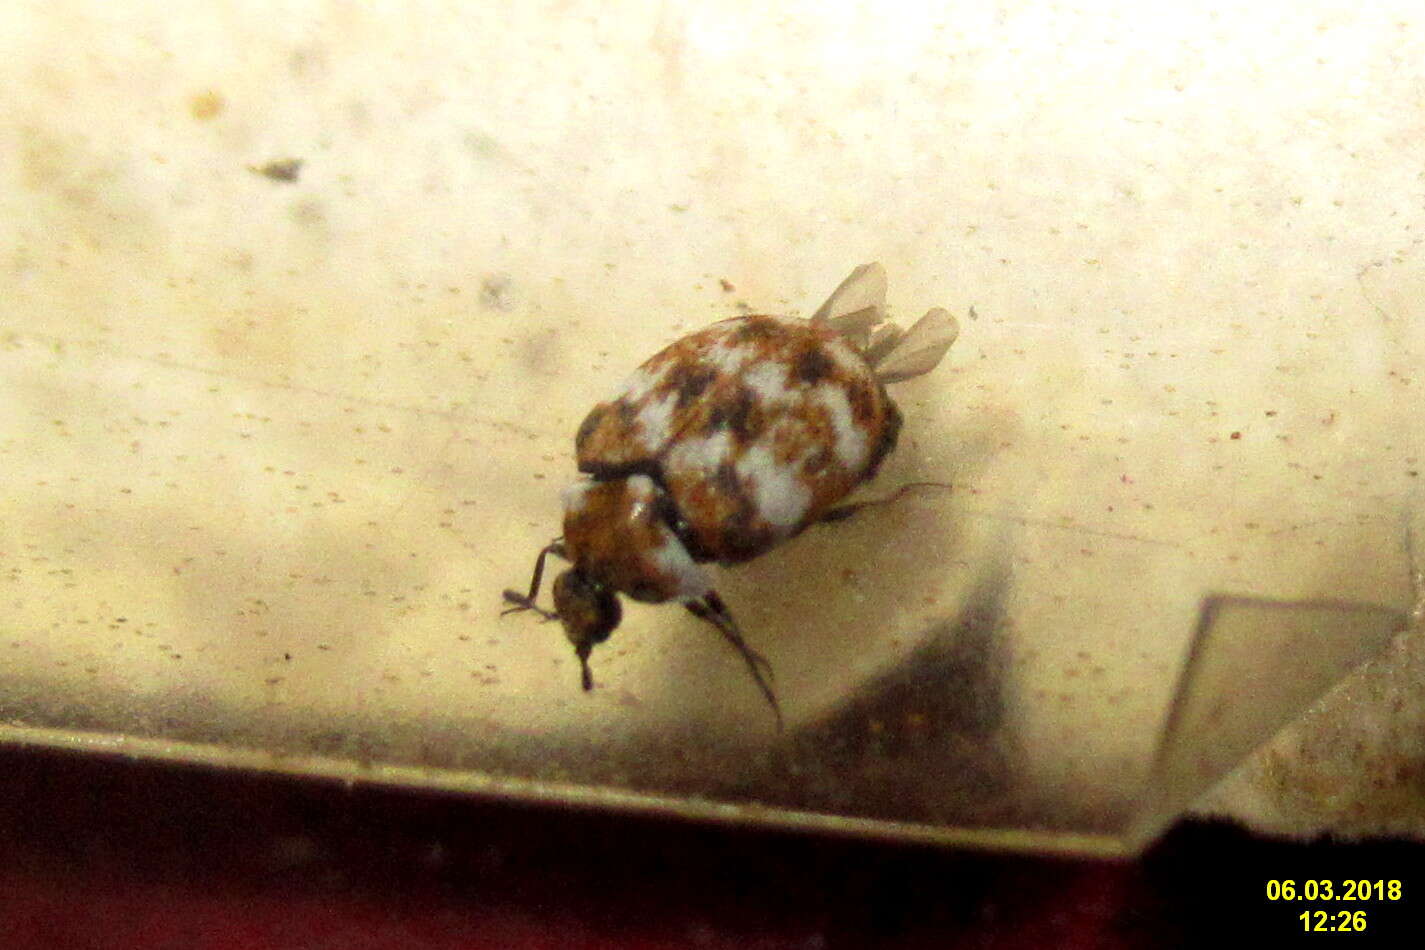 Image of Sacramento Anthicid Beetle